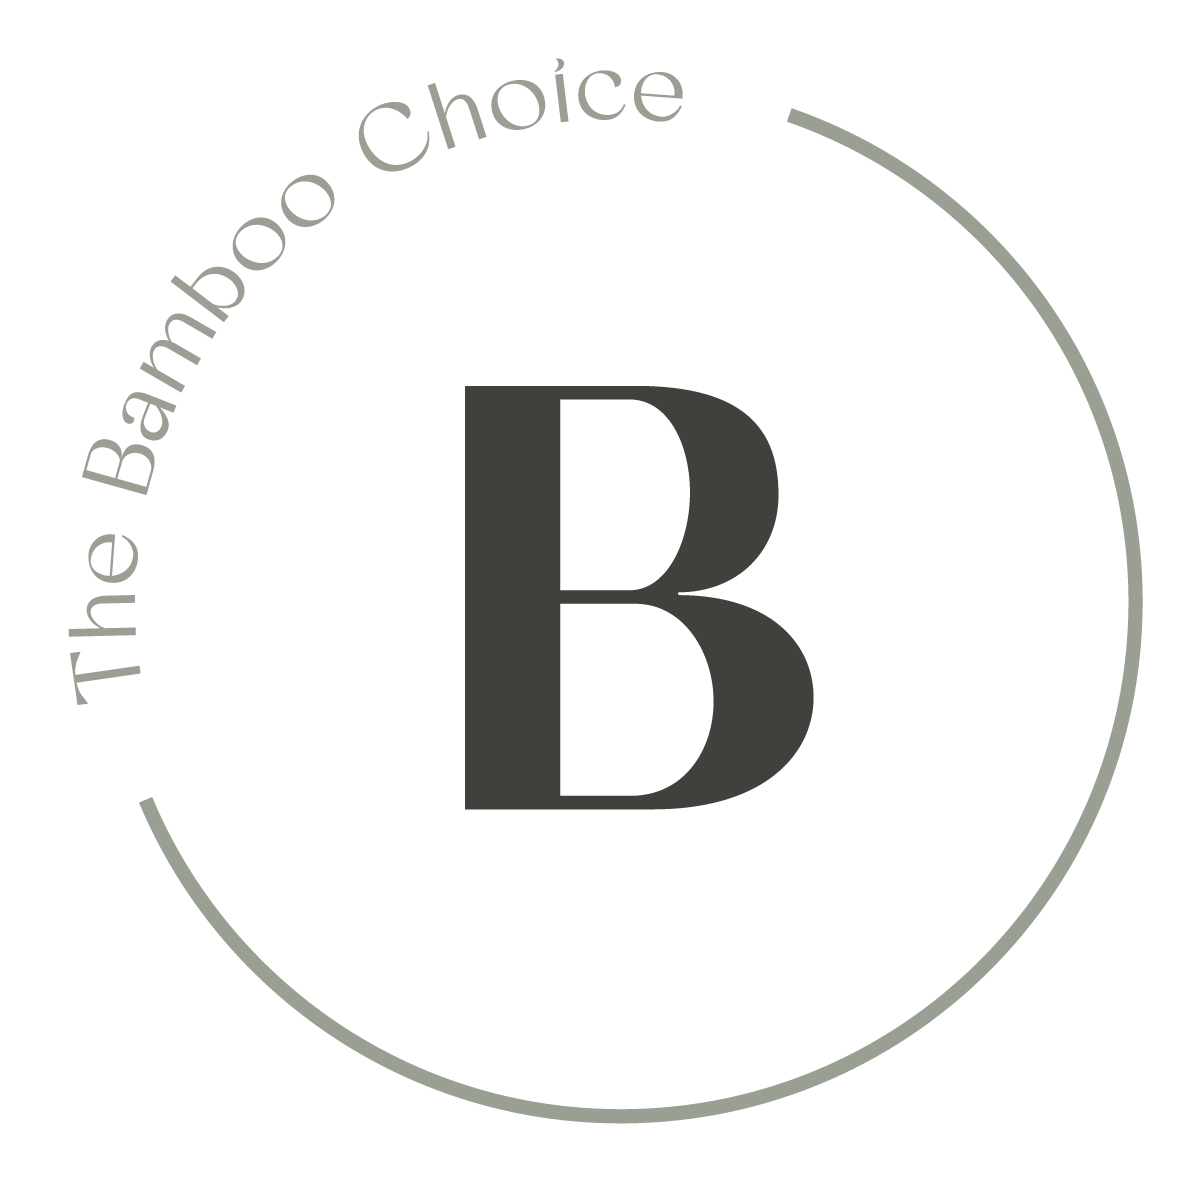 Bamboo Choice Logo (the-bamboo-choice.jpg)